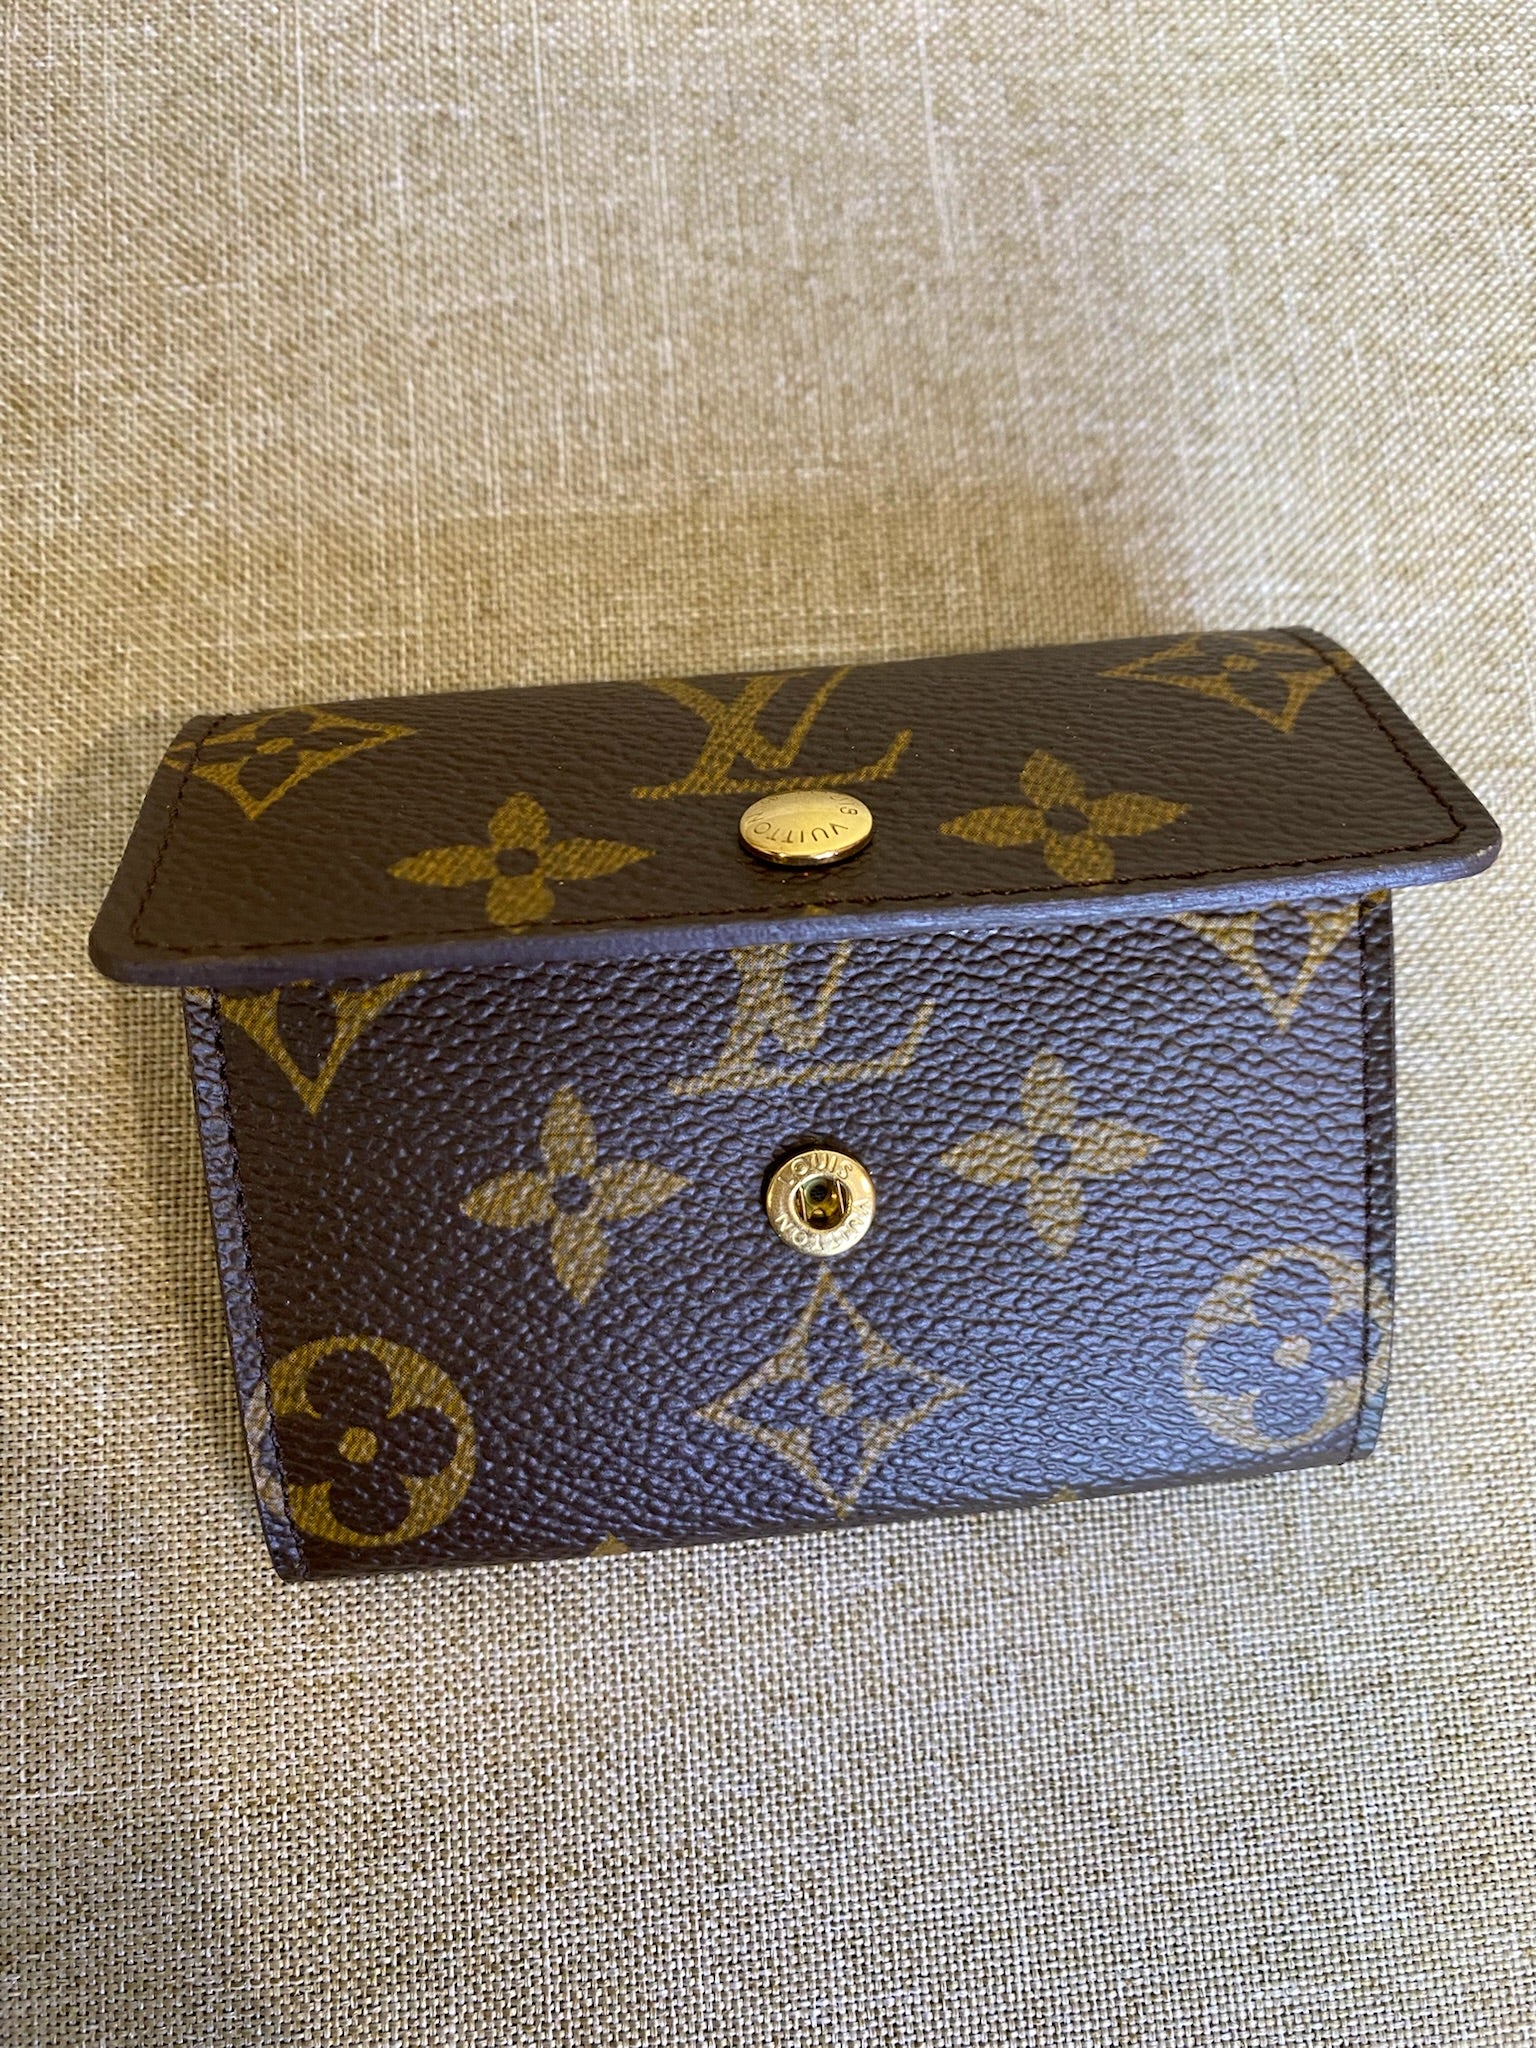 Louis VUITTON year 2010 Compact wallet in Monogram star…